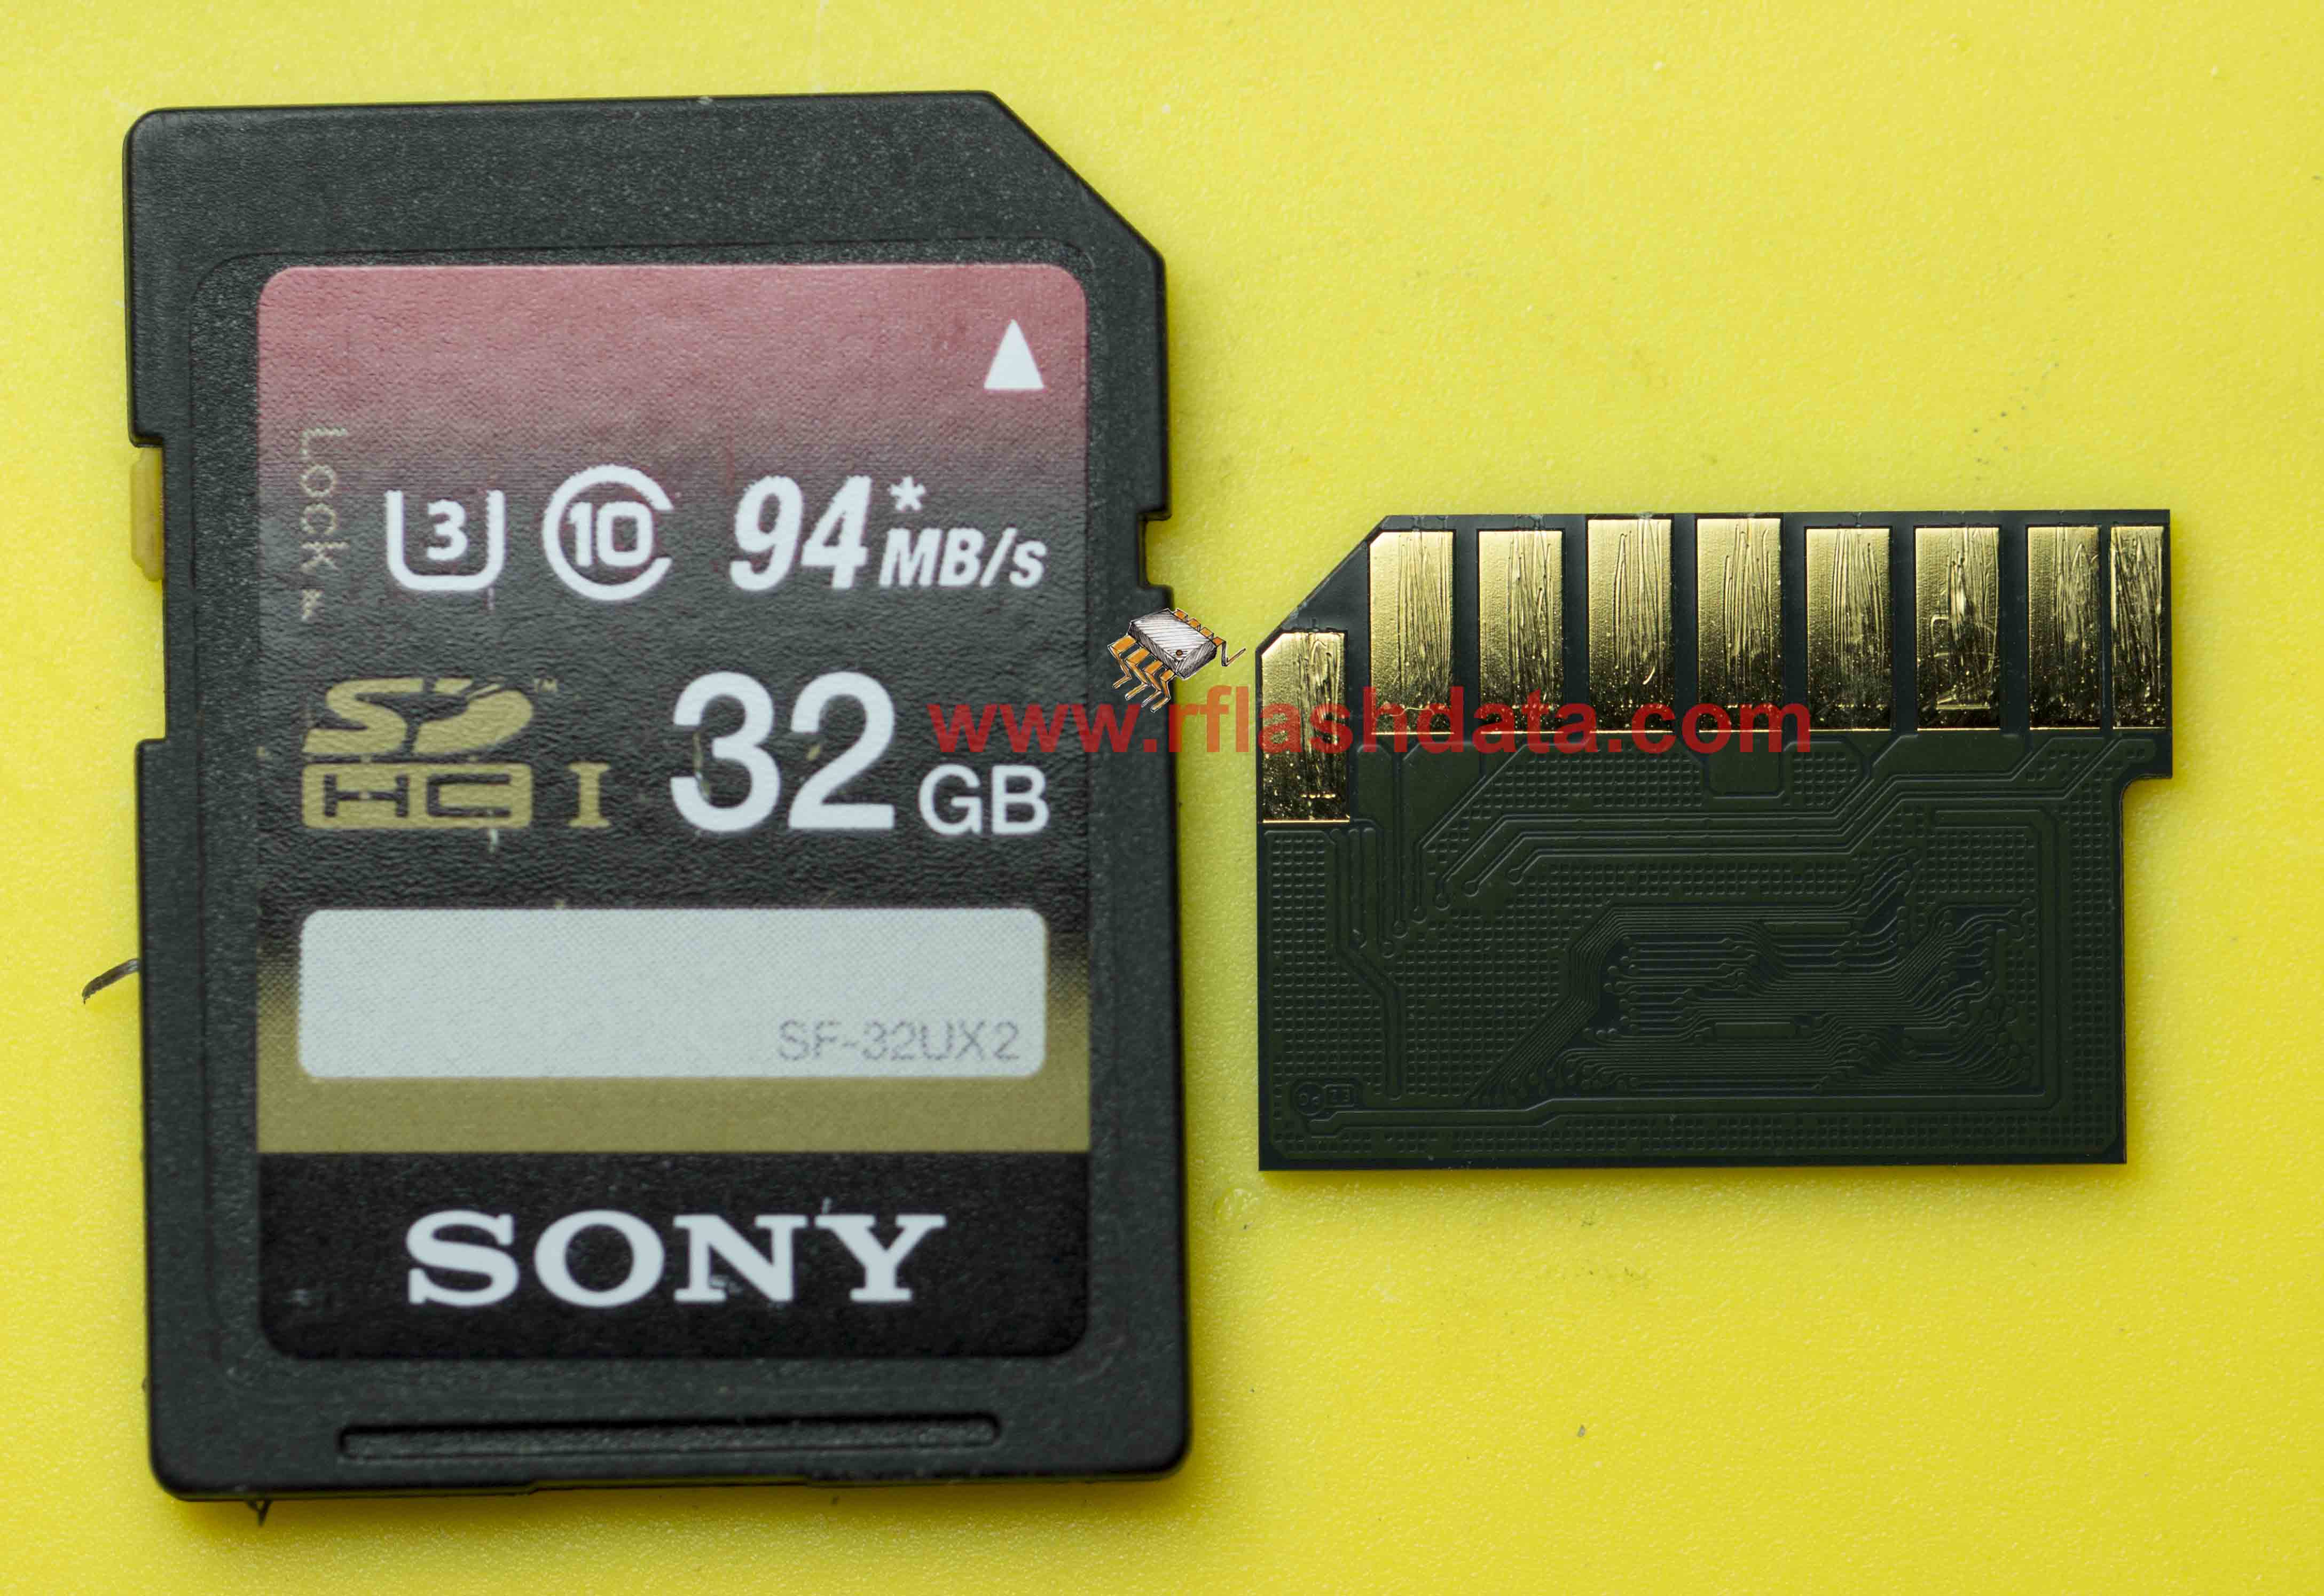 SONy SD memory card